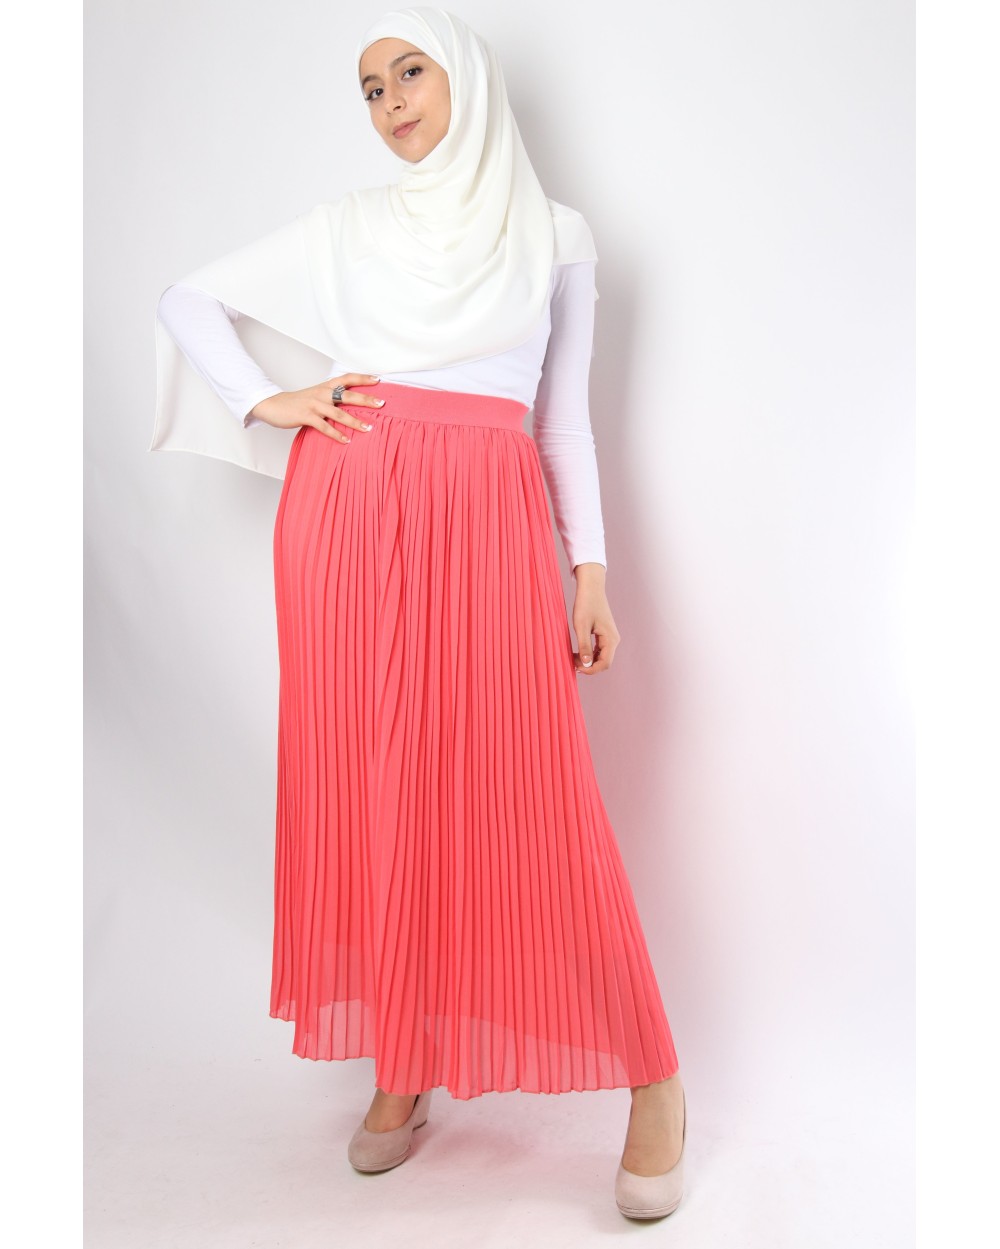 Pleated skirt with elastic waist.